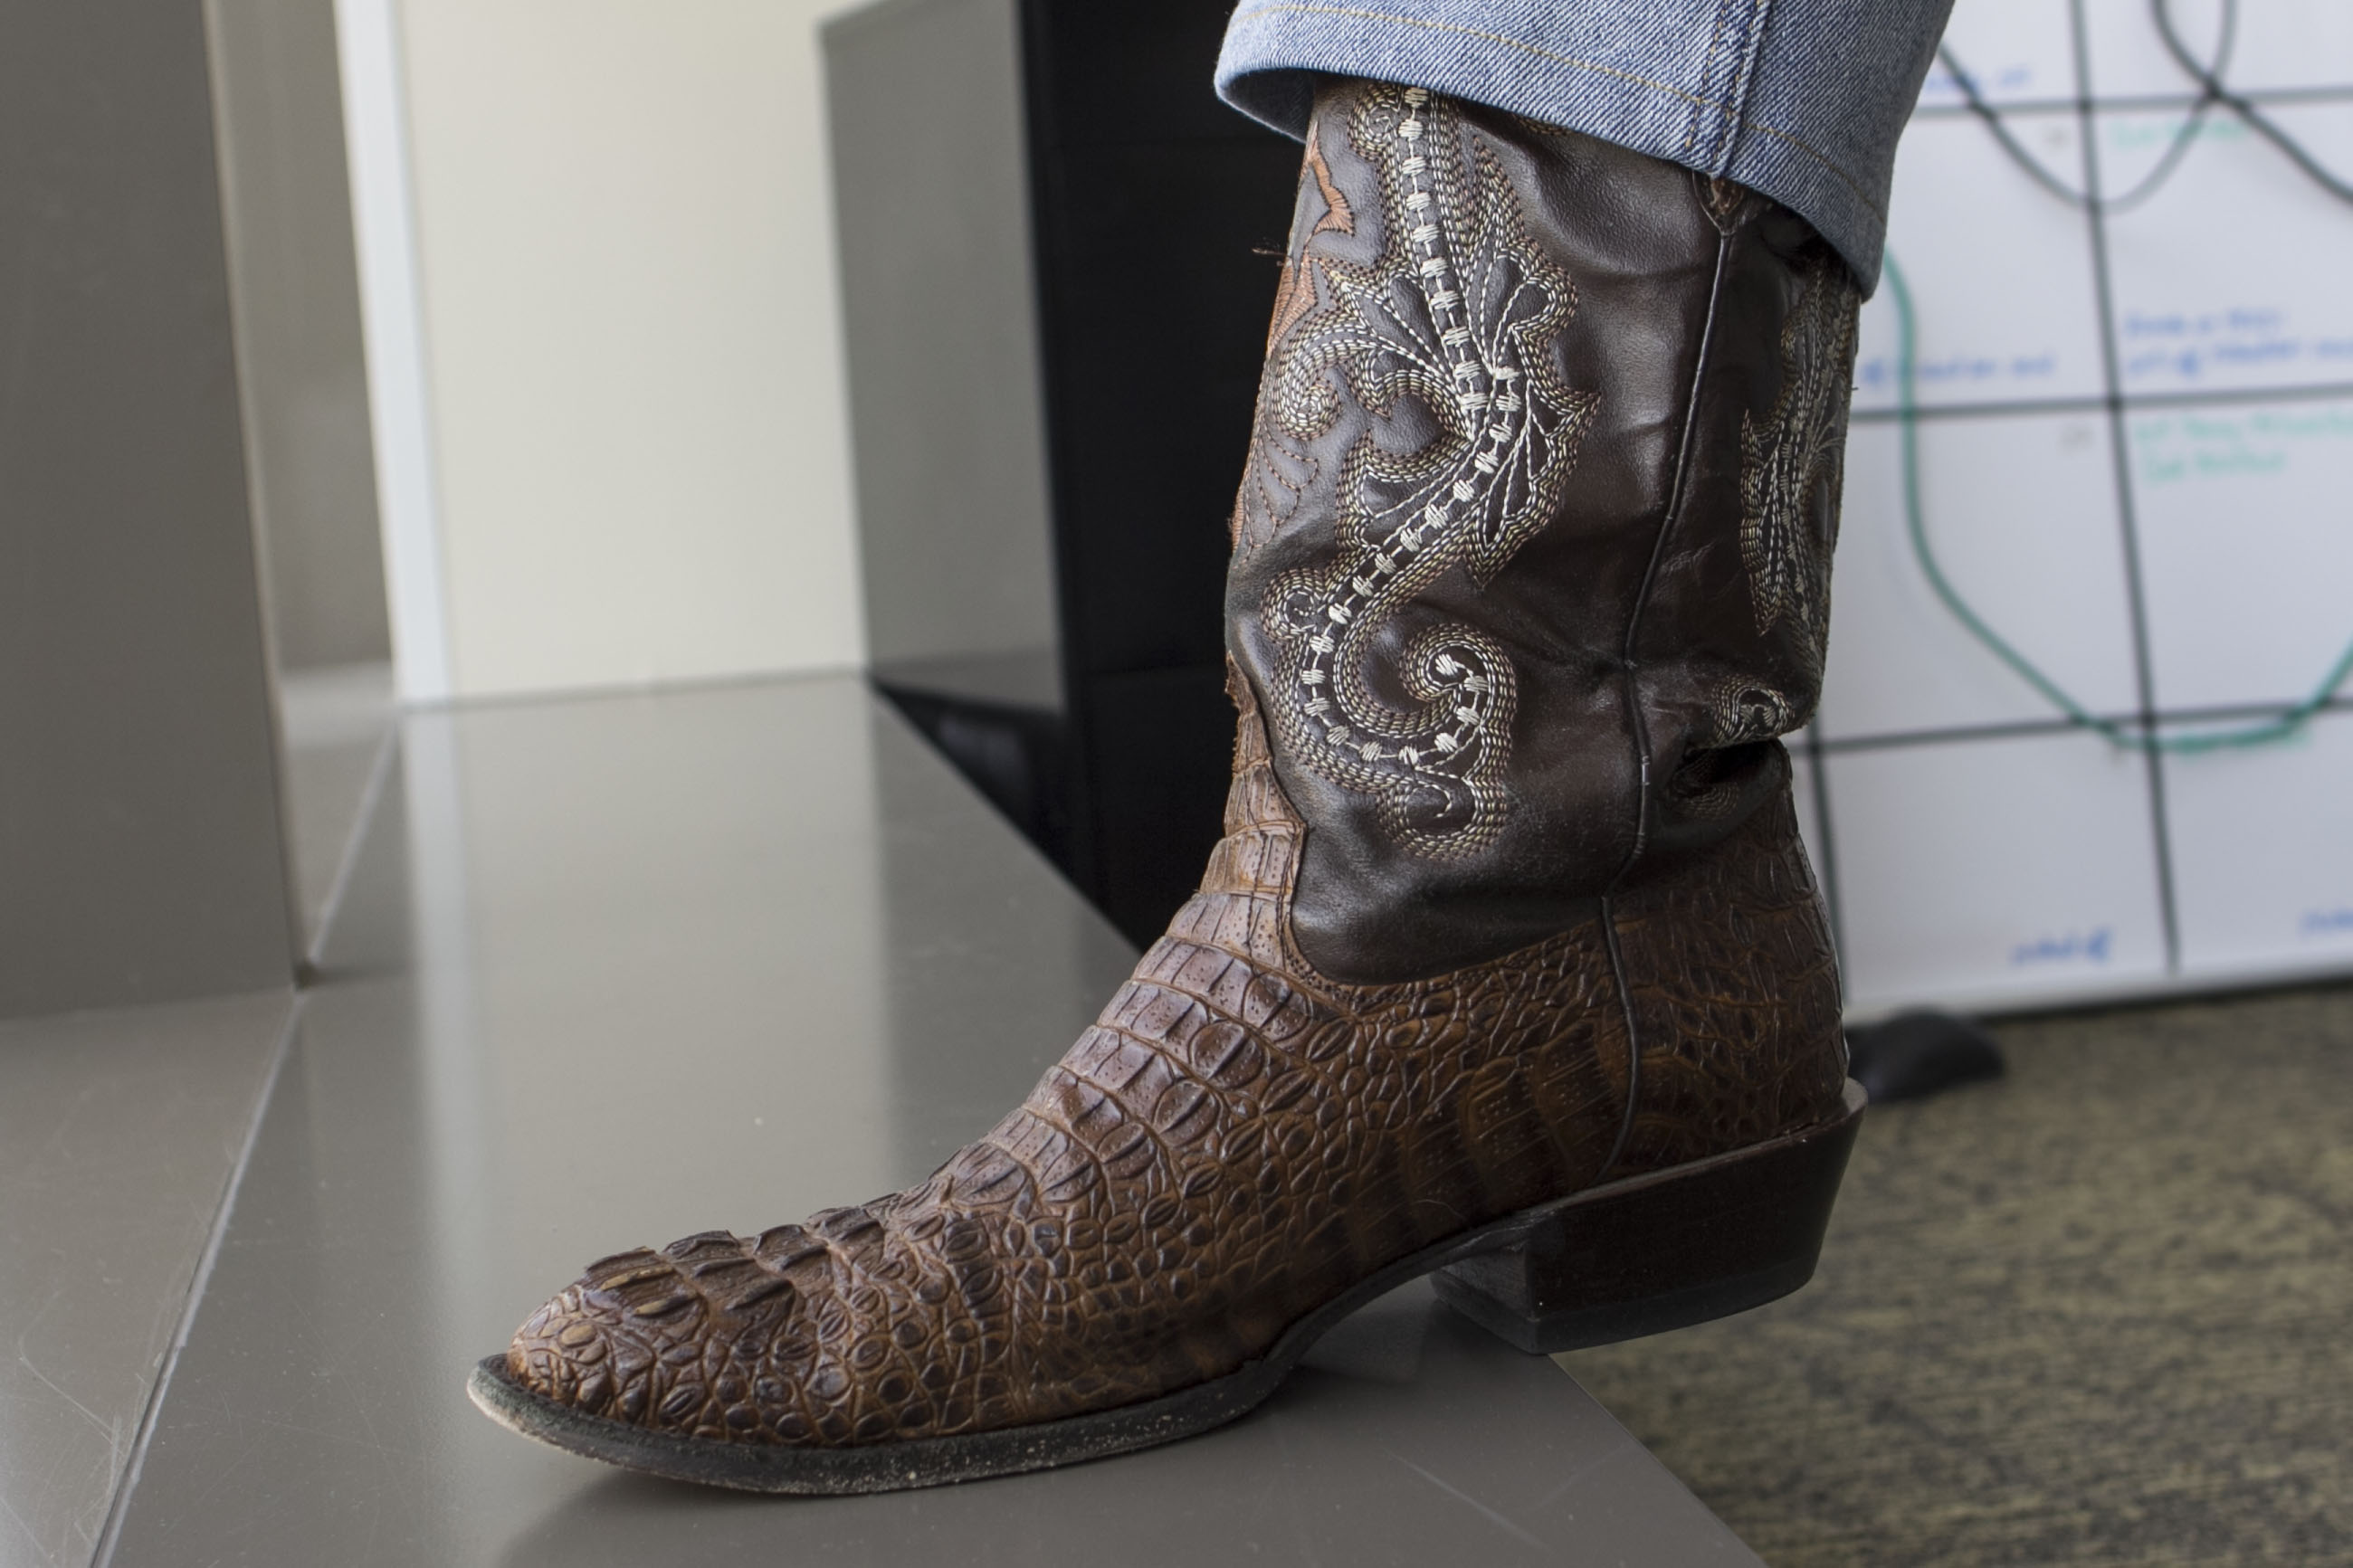 Mark-Walters-boots-by-Kristen-Cabrera.jpg